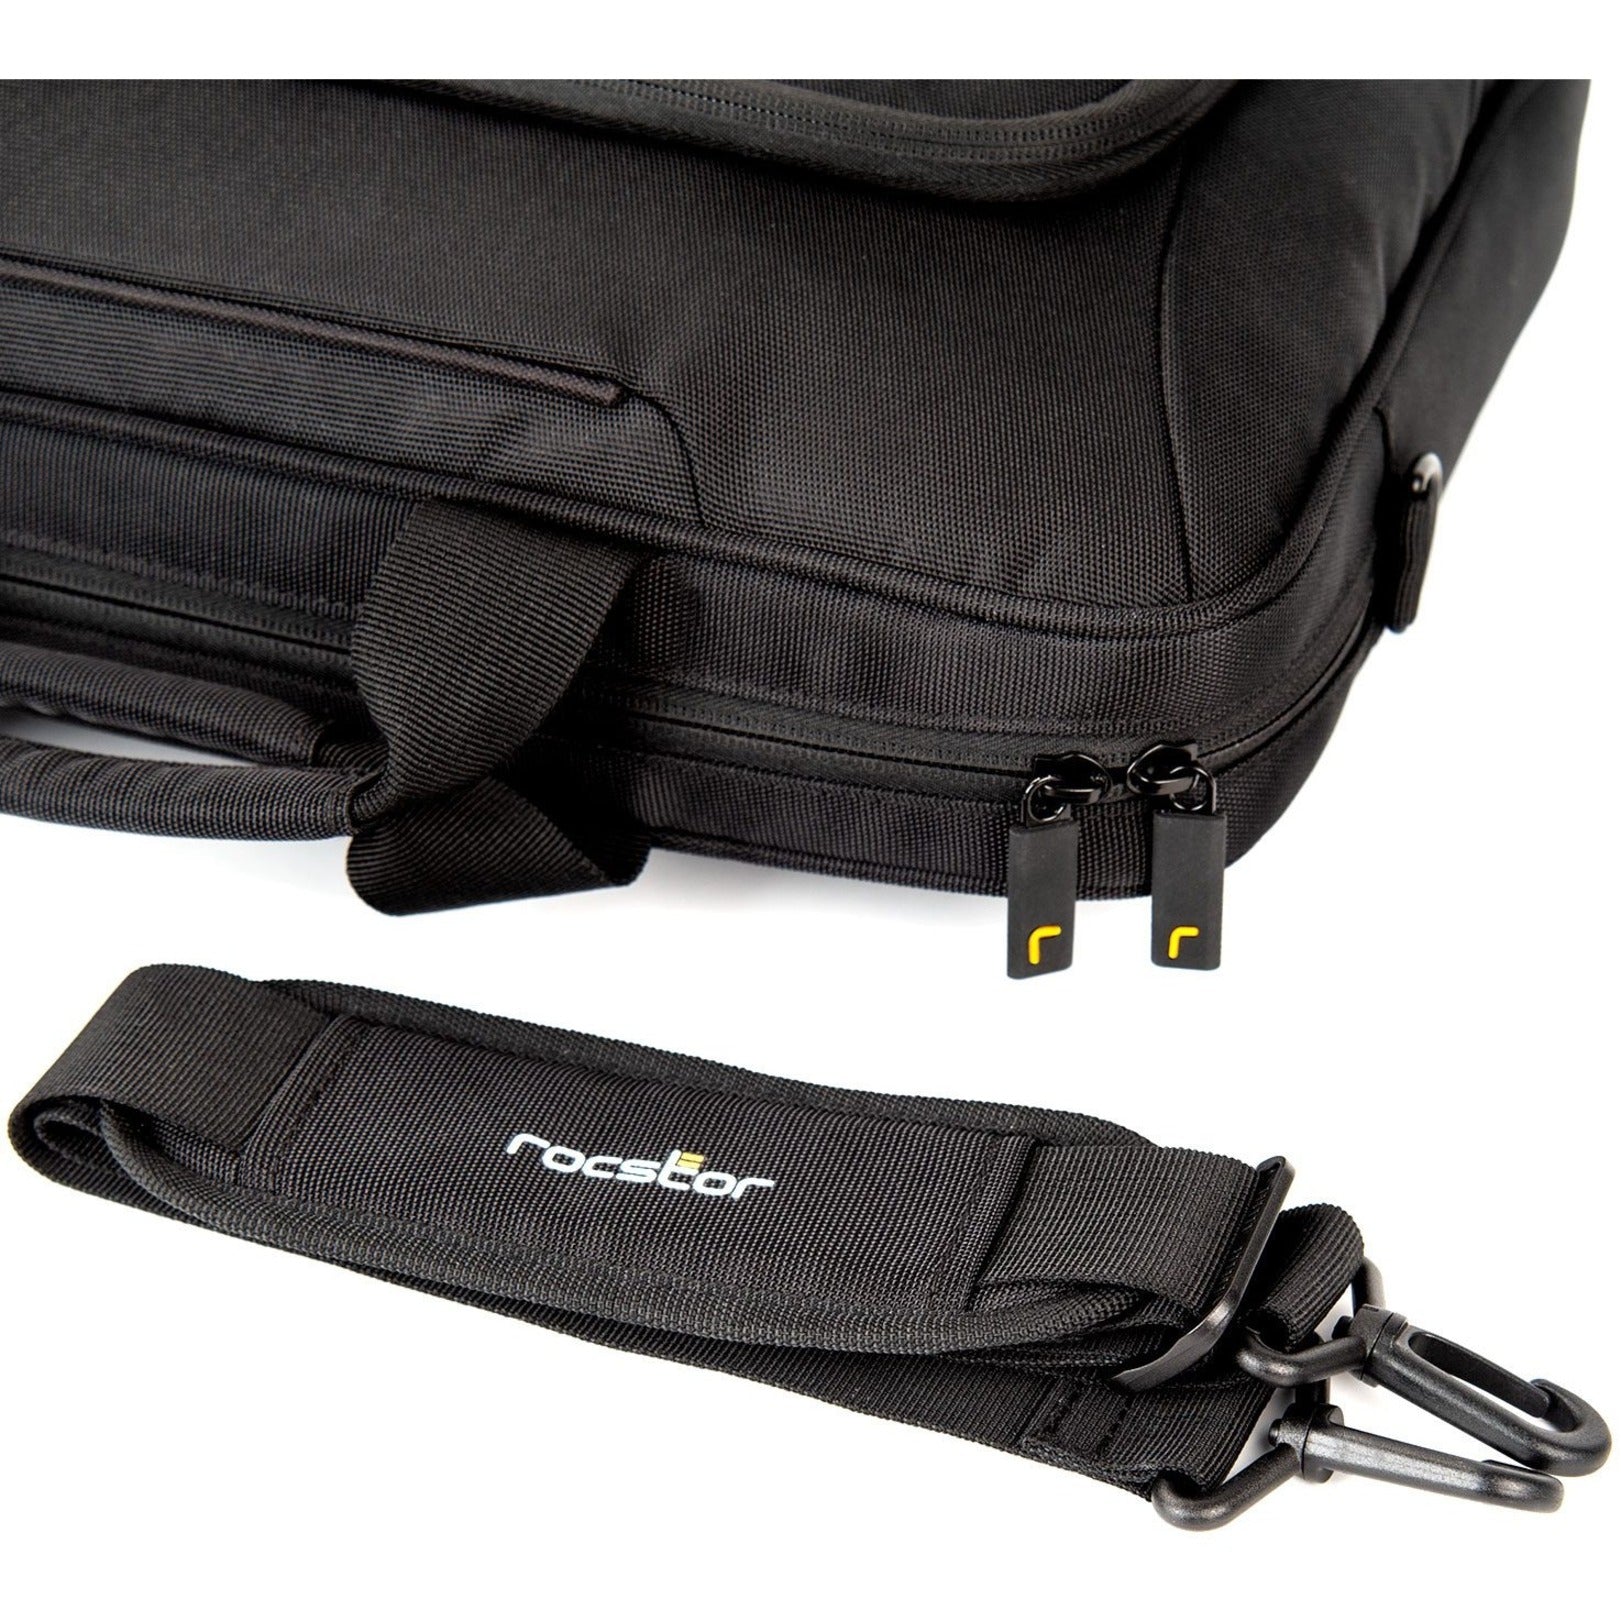 Rocstor Y1CC002-B1 Premium Universal Laptop Carrying Case Toploading, Fits up to 16" Laptop, RFID Pocket